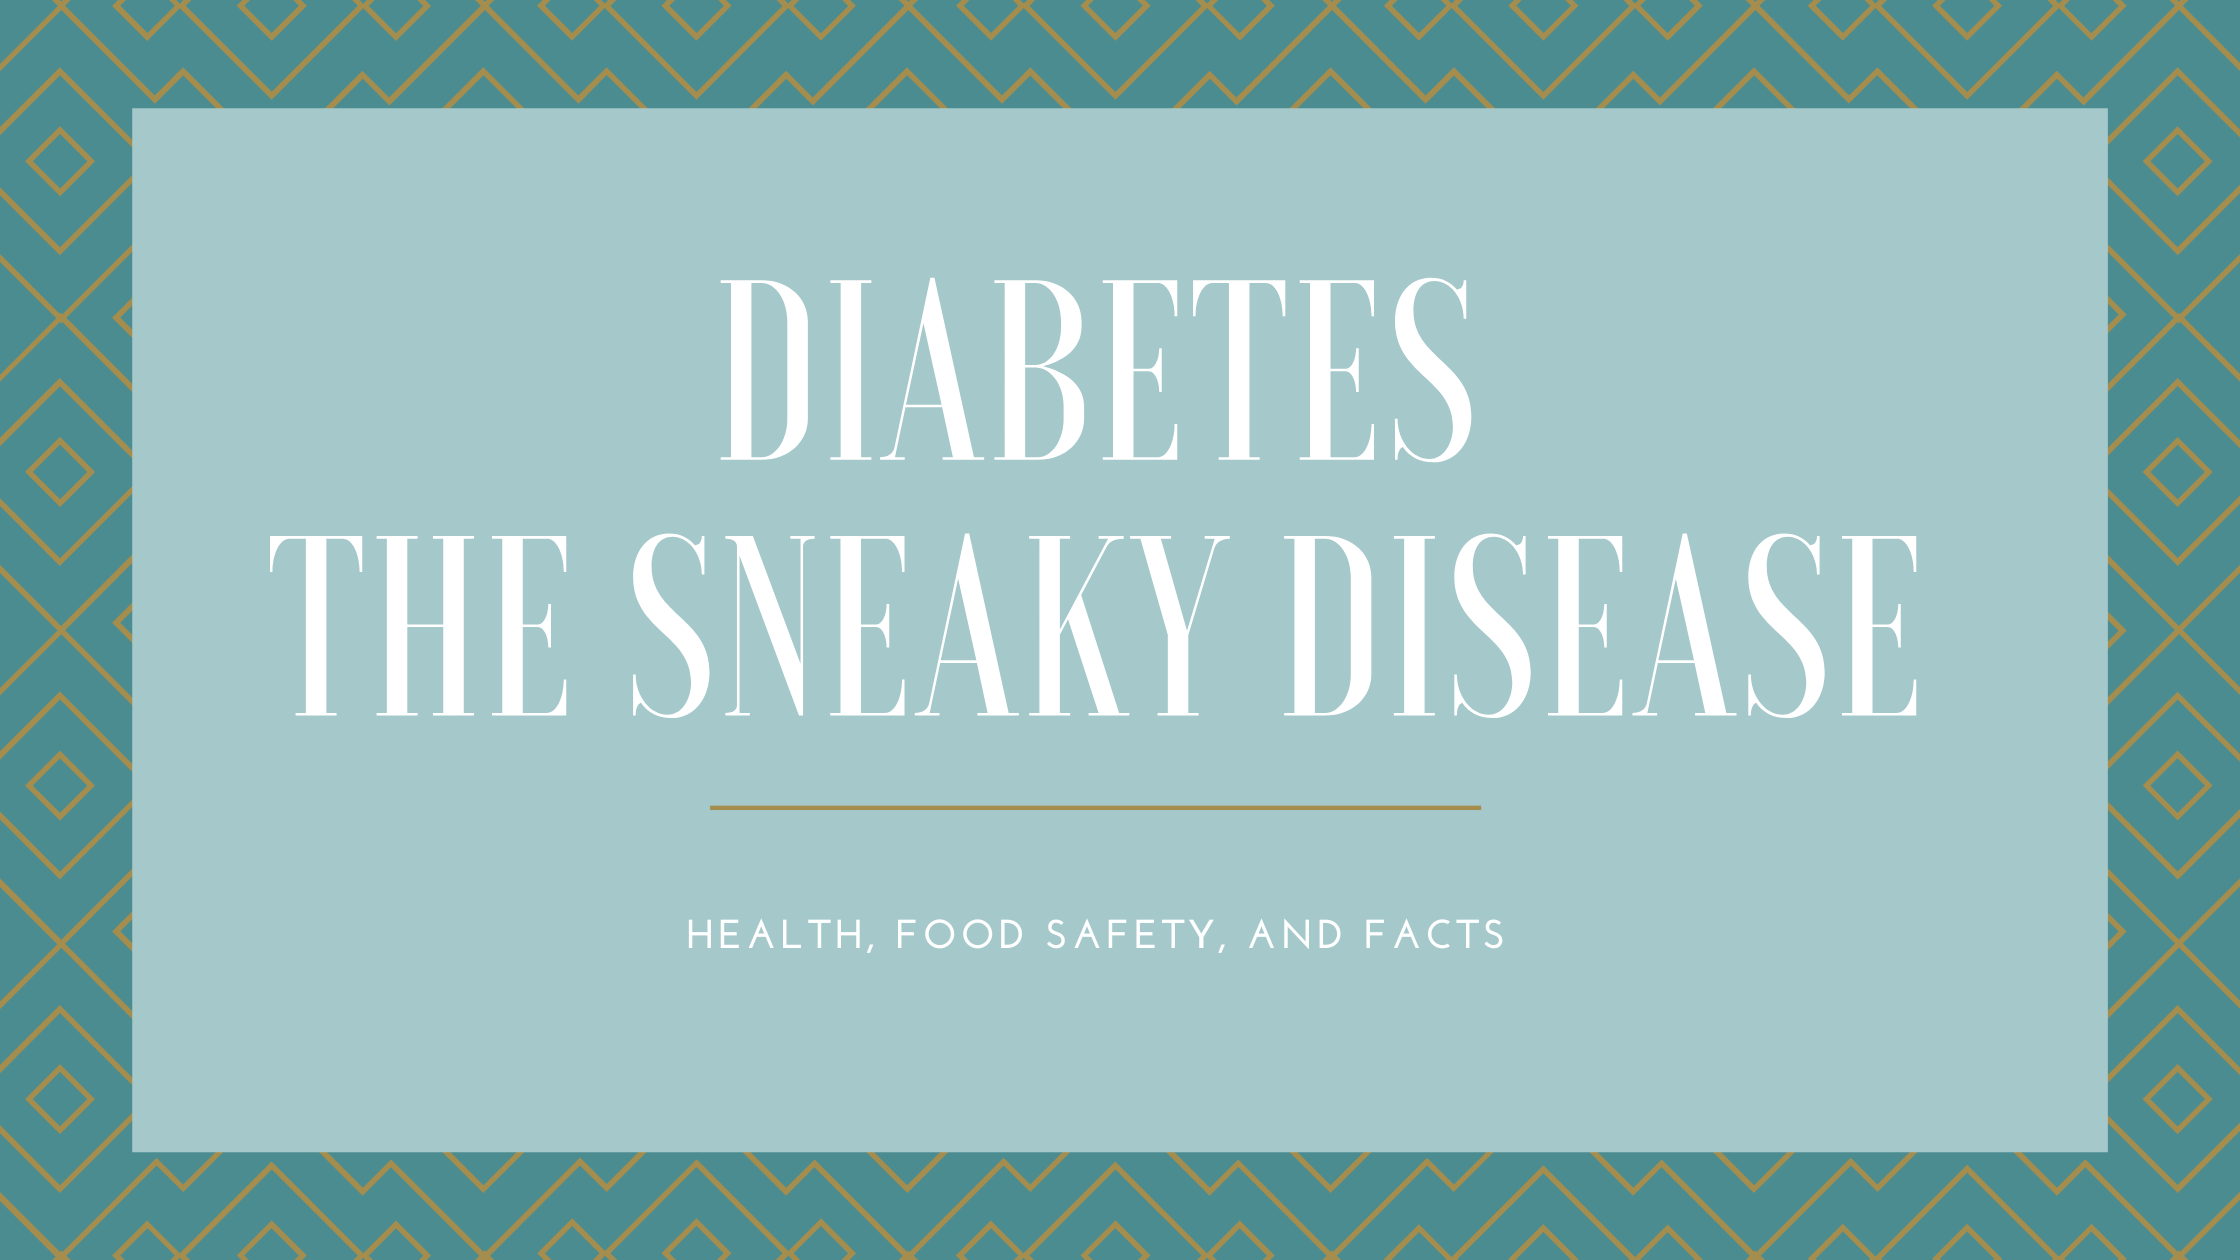 Diabetes Awareness The Sneaky Disease